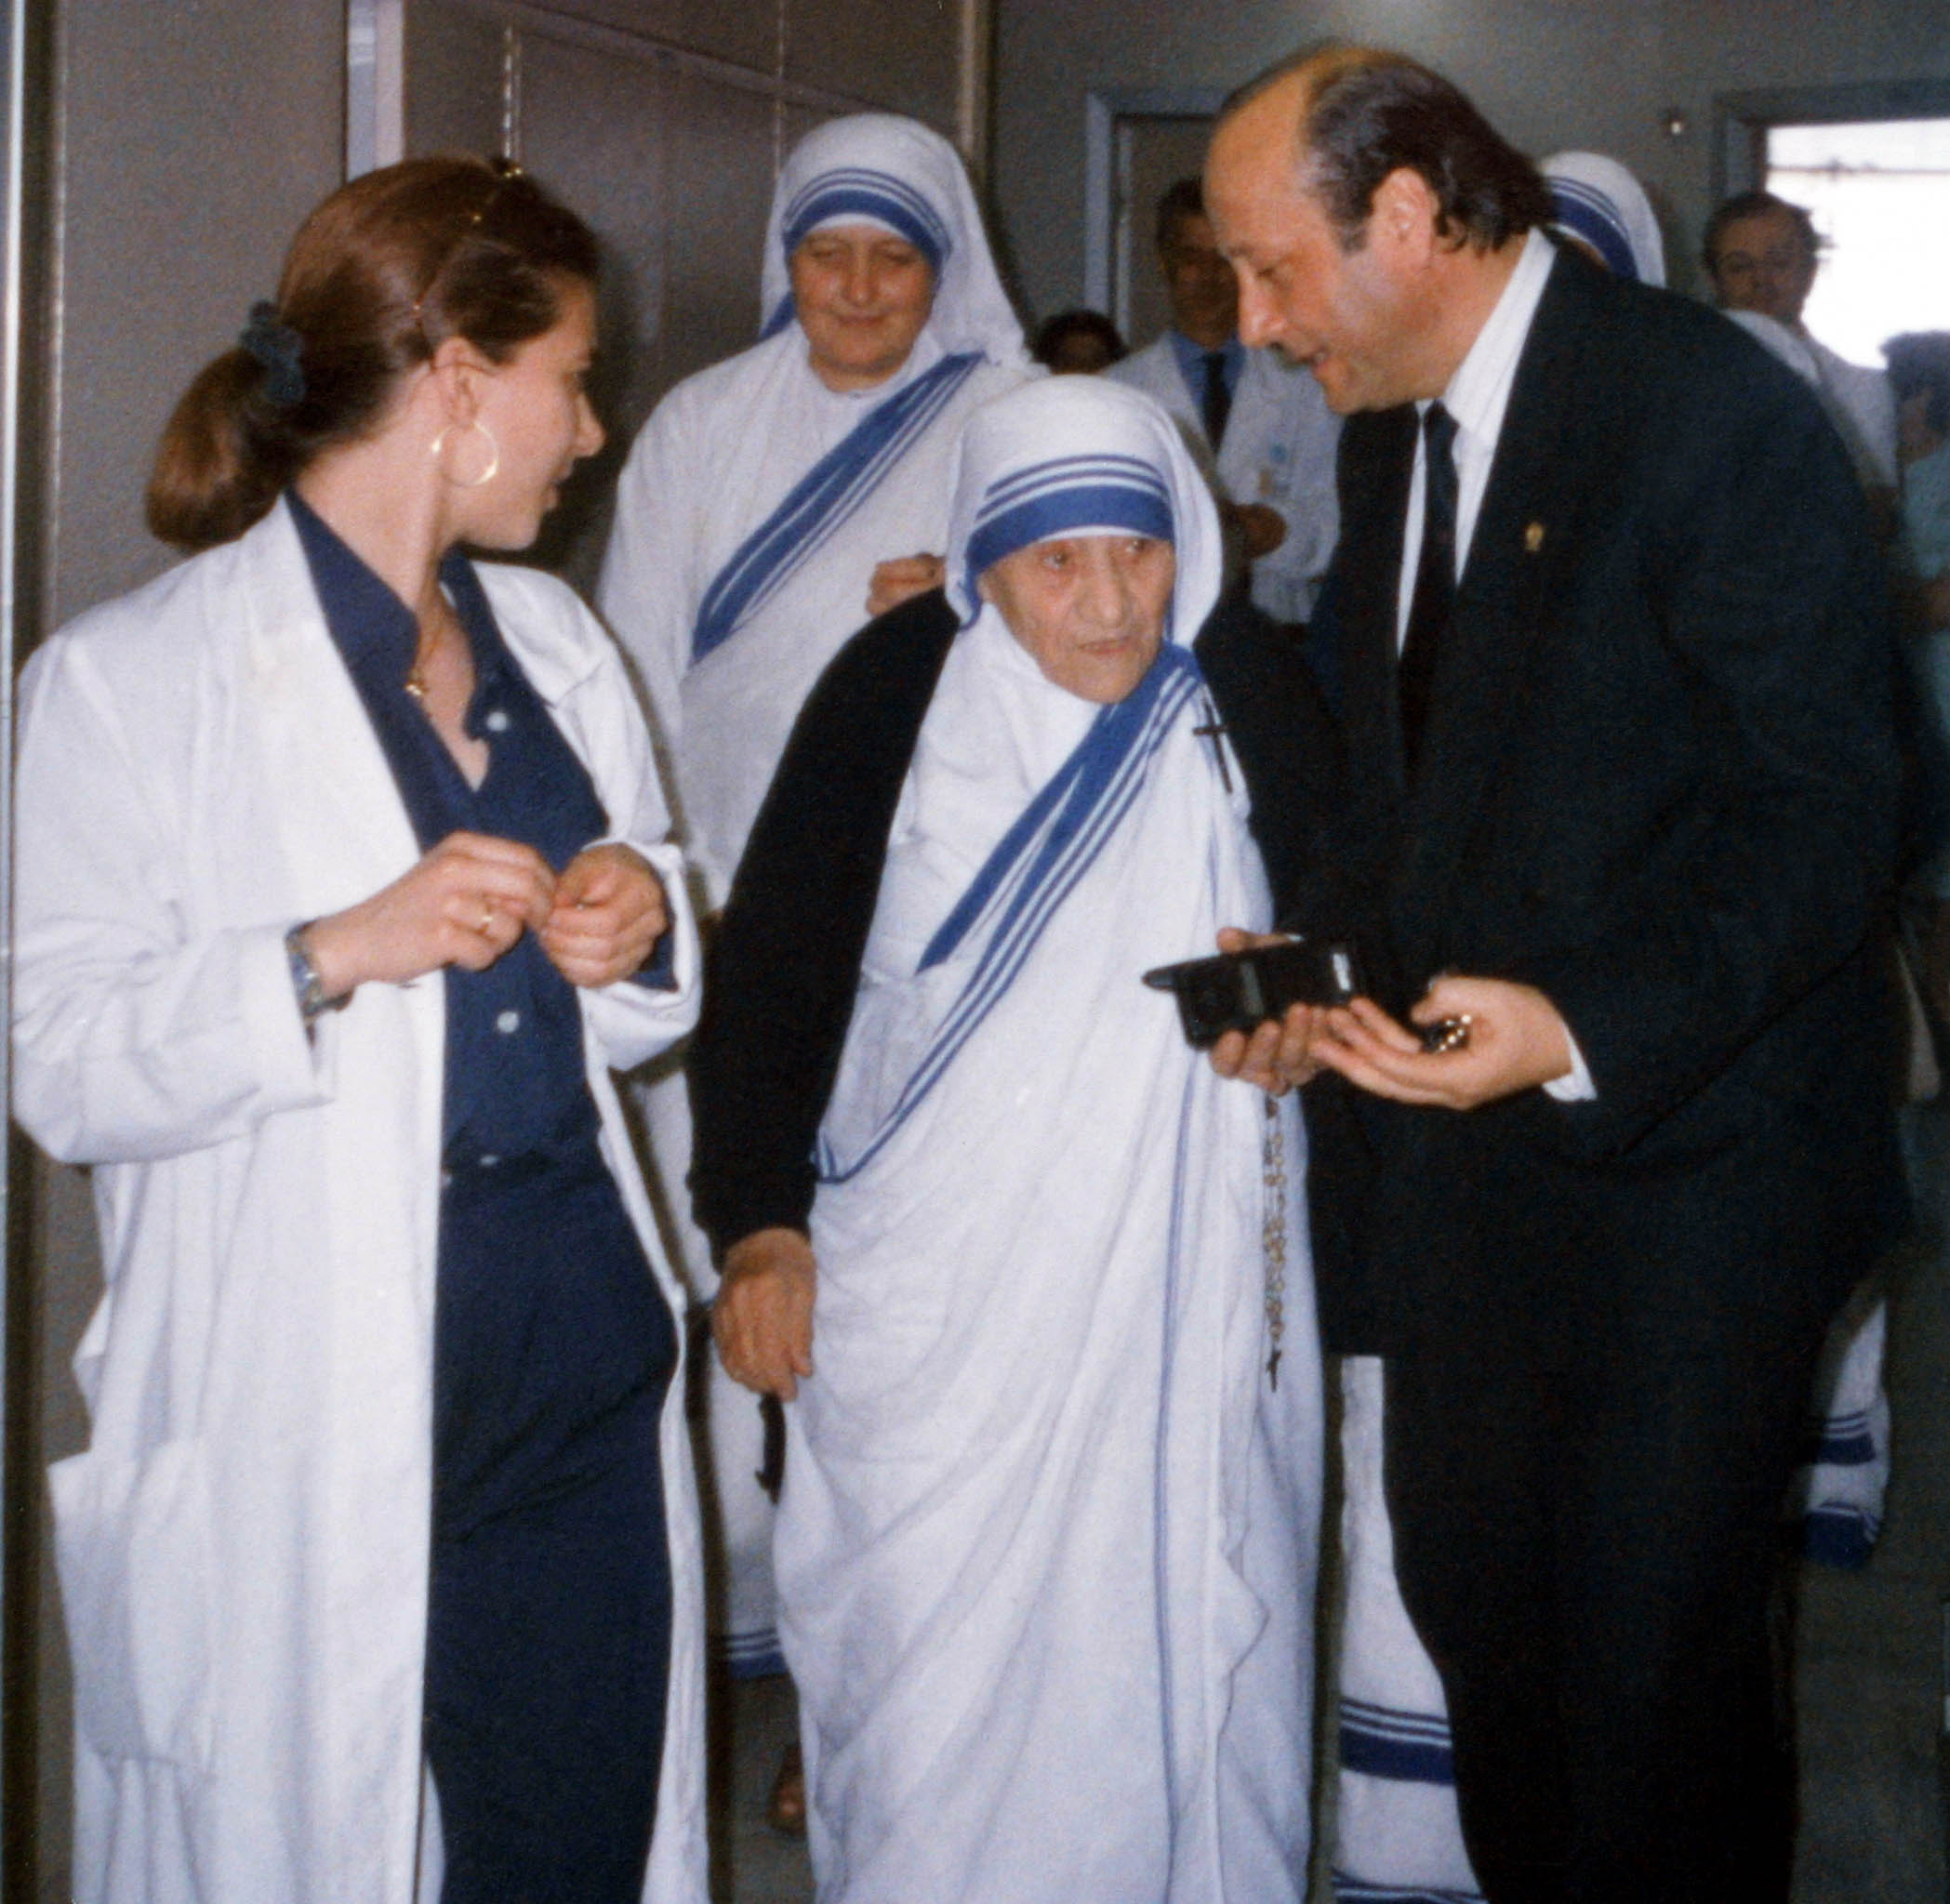 Madre Teresa 2